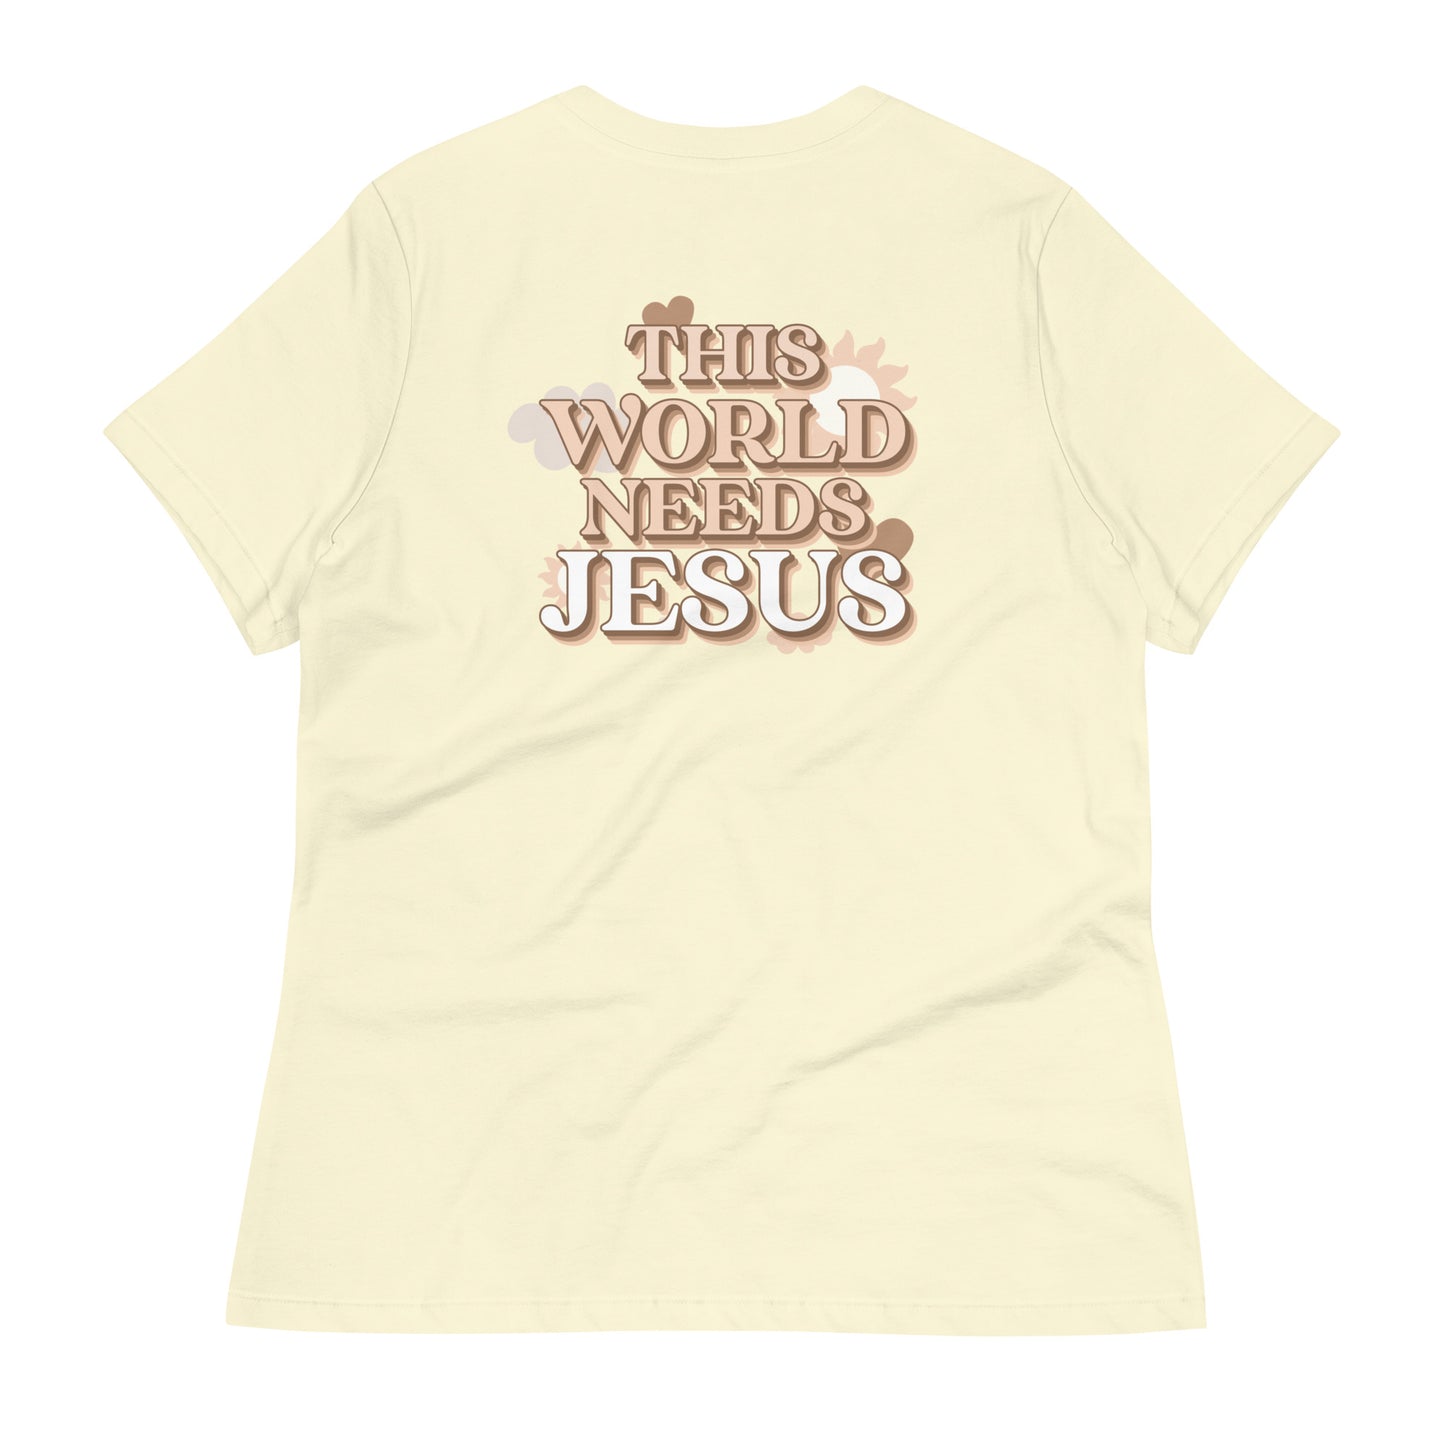 This World Needs Jesus ! - Women's Relaxed T-Shirt